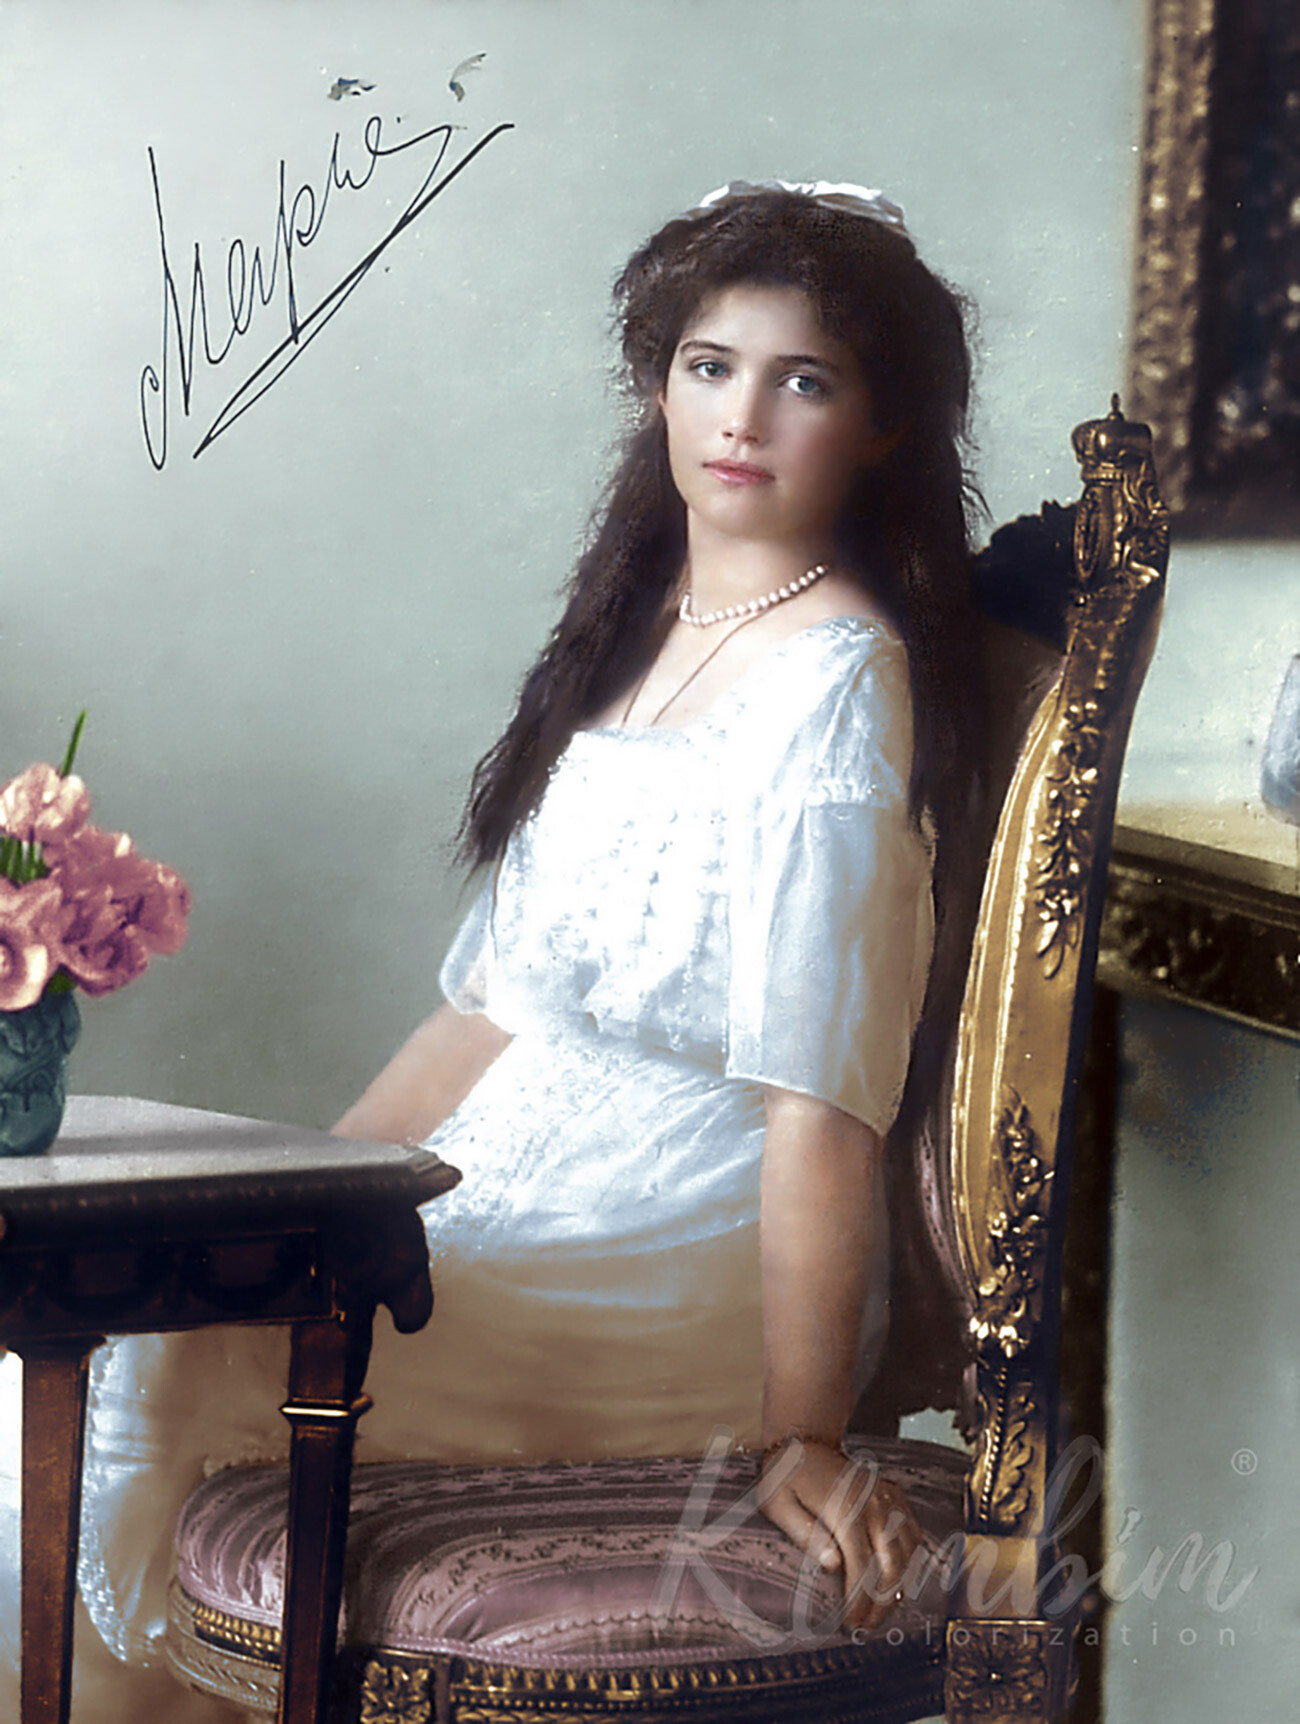 La granduchessa Marija Romanova  (1899-1918)

